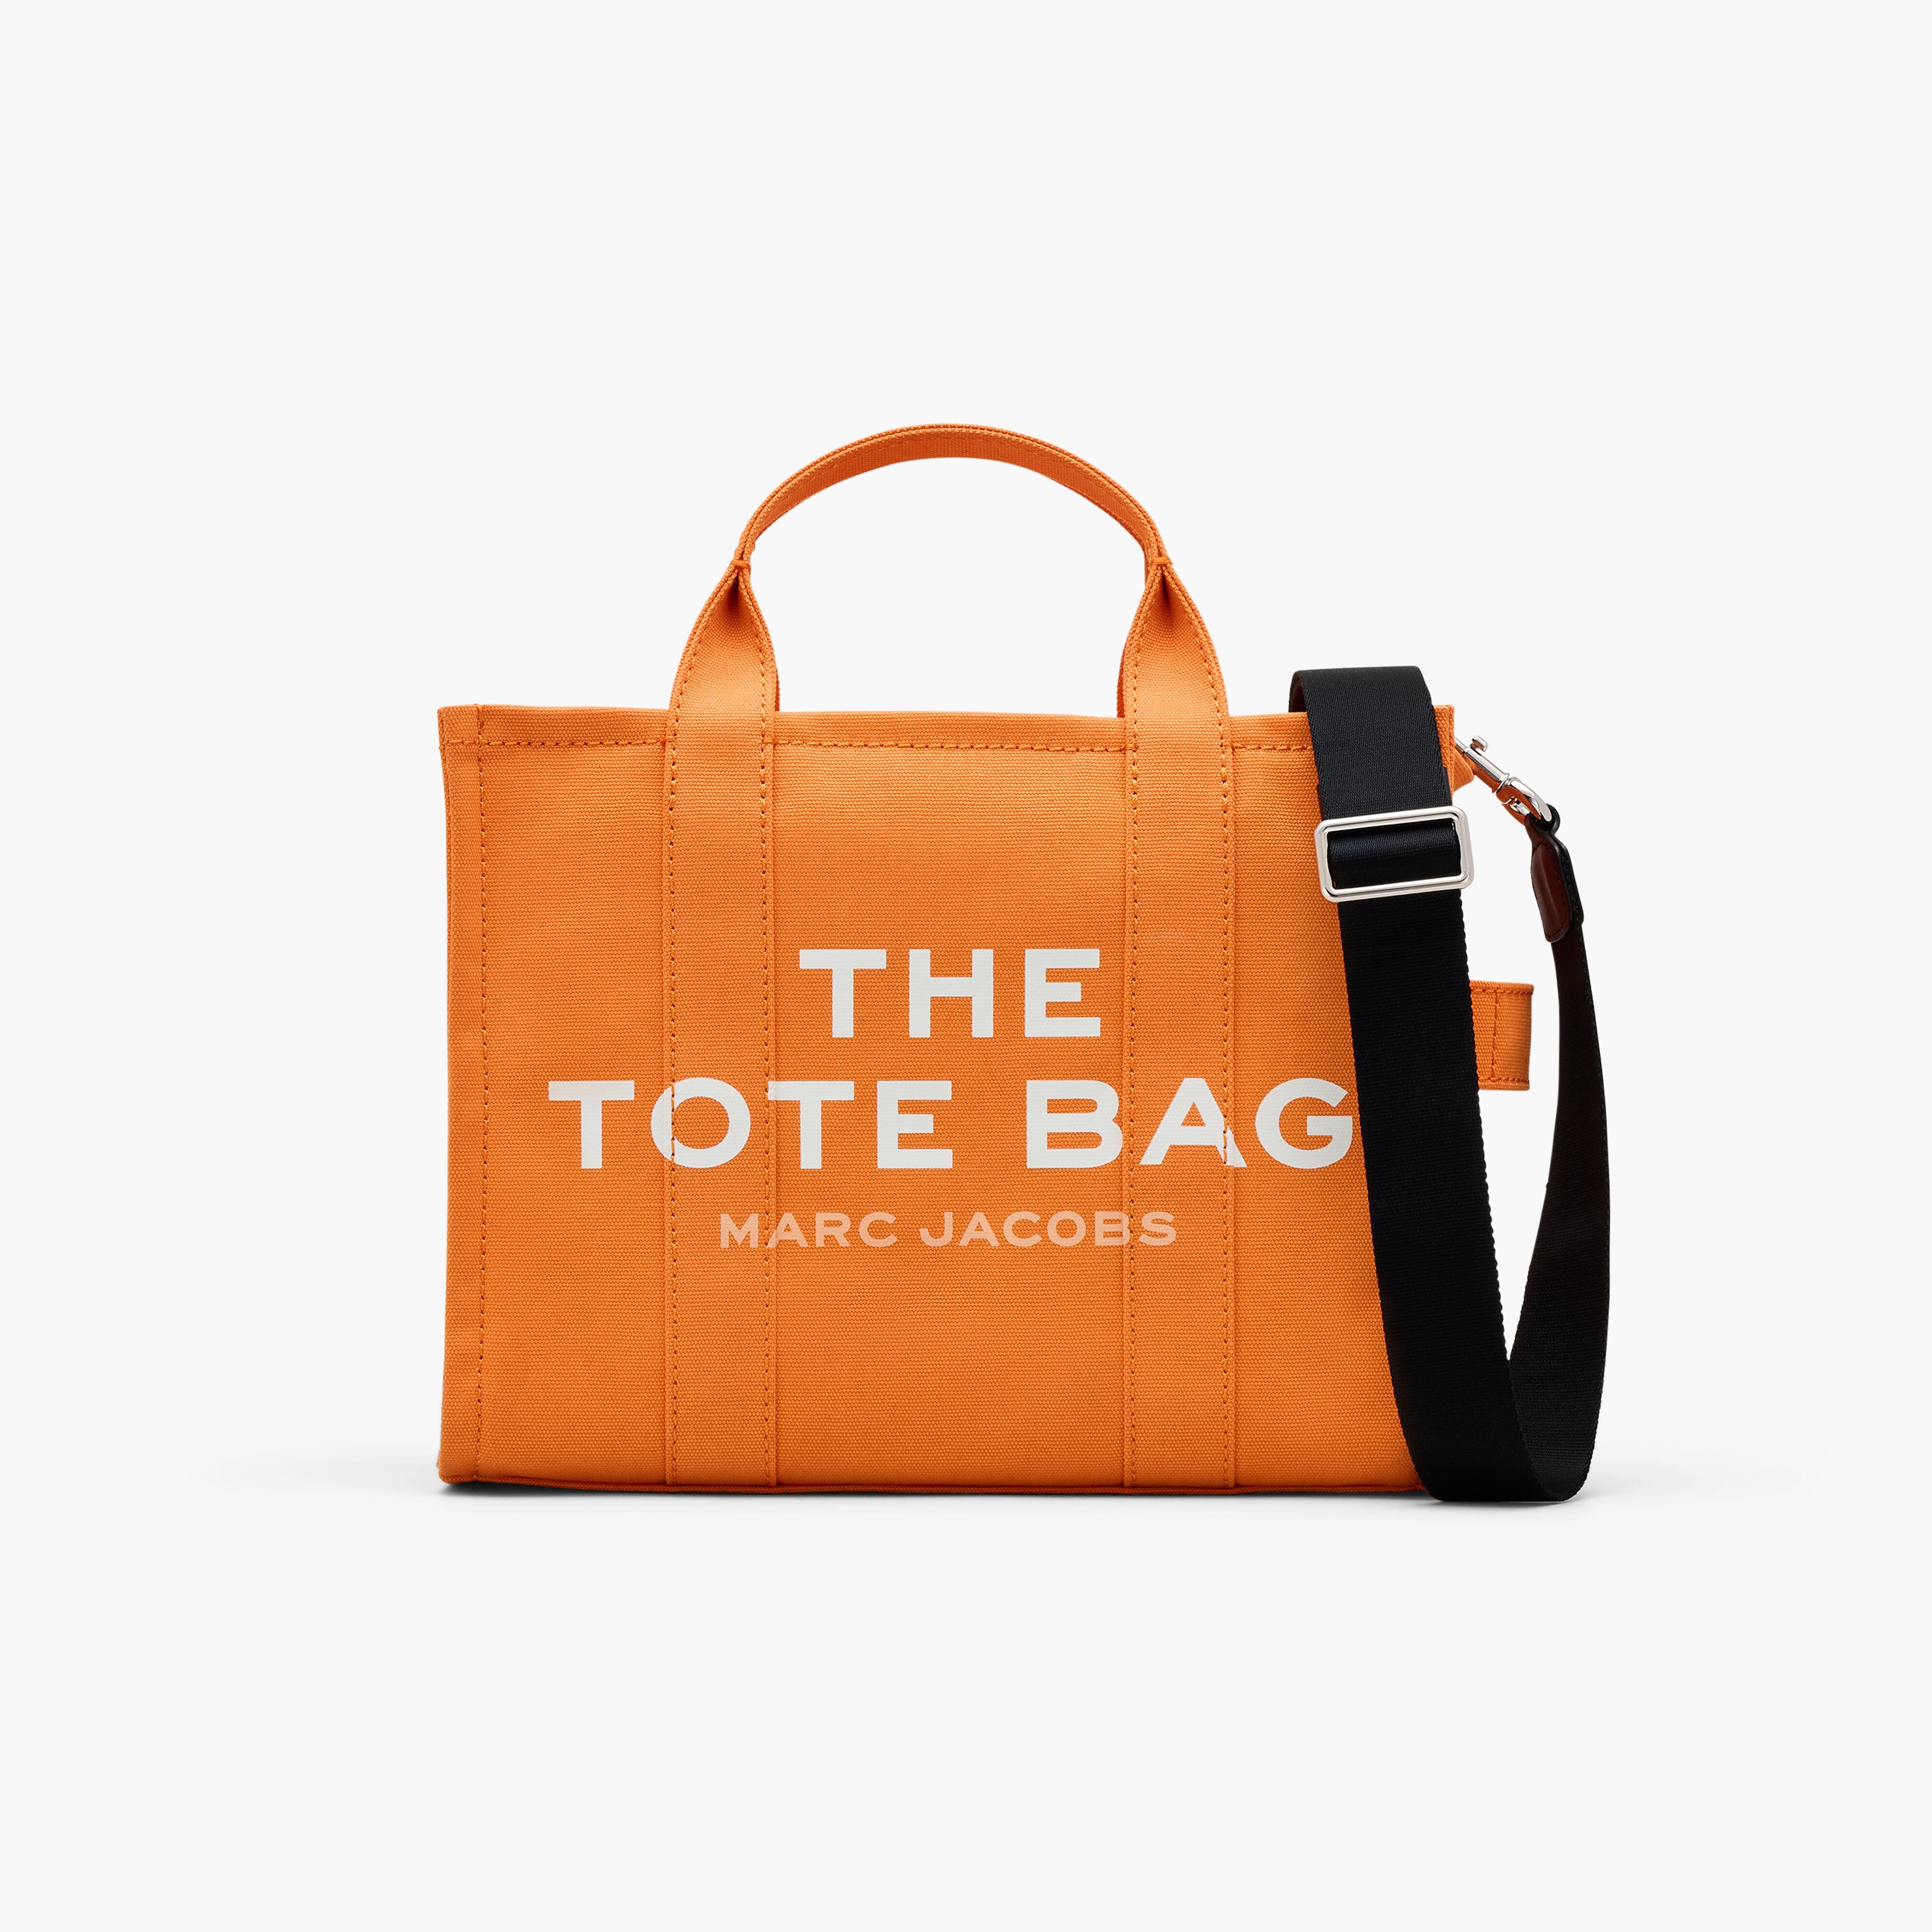 MARC JACOBS - The Medium Tote Bag - M0016161- 818 Tangerine Borse Marc Jacobs 